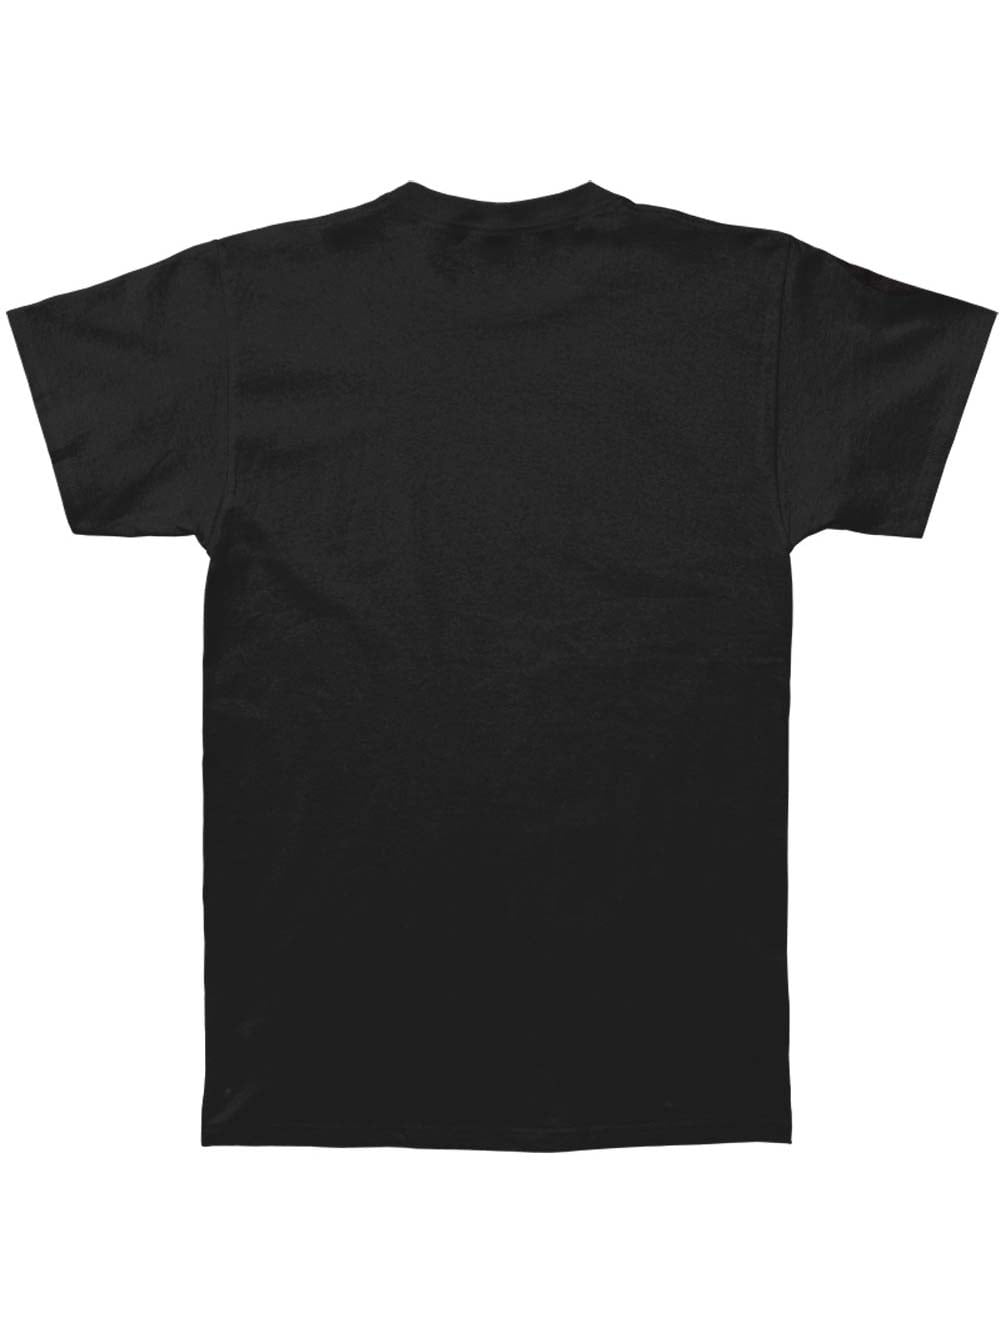 BRAVADO - Run DMC - Classic Logo Apparel T-Shirt - Black - Walmart.com